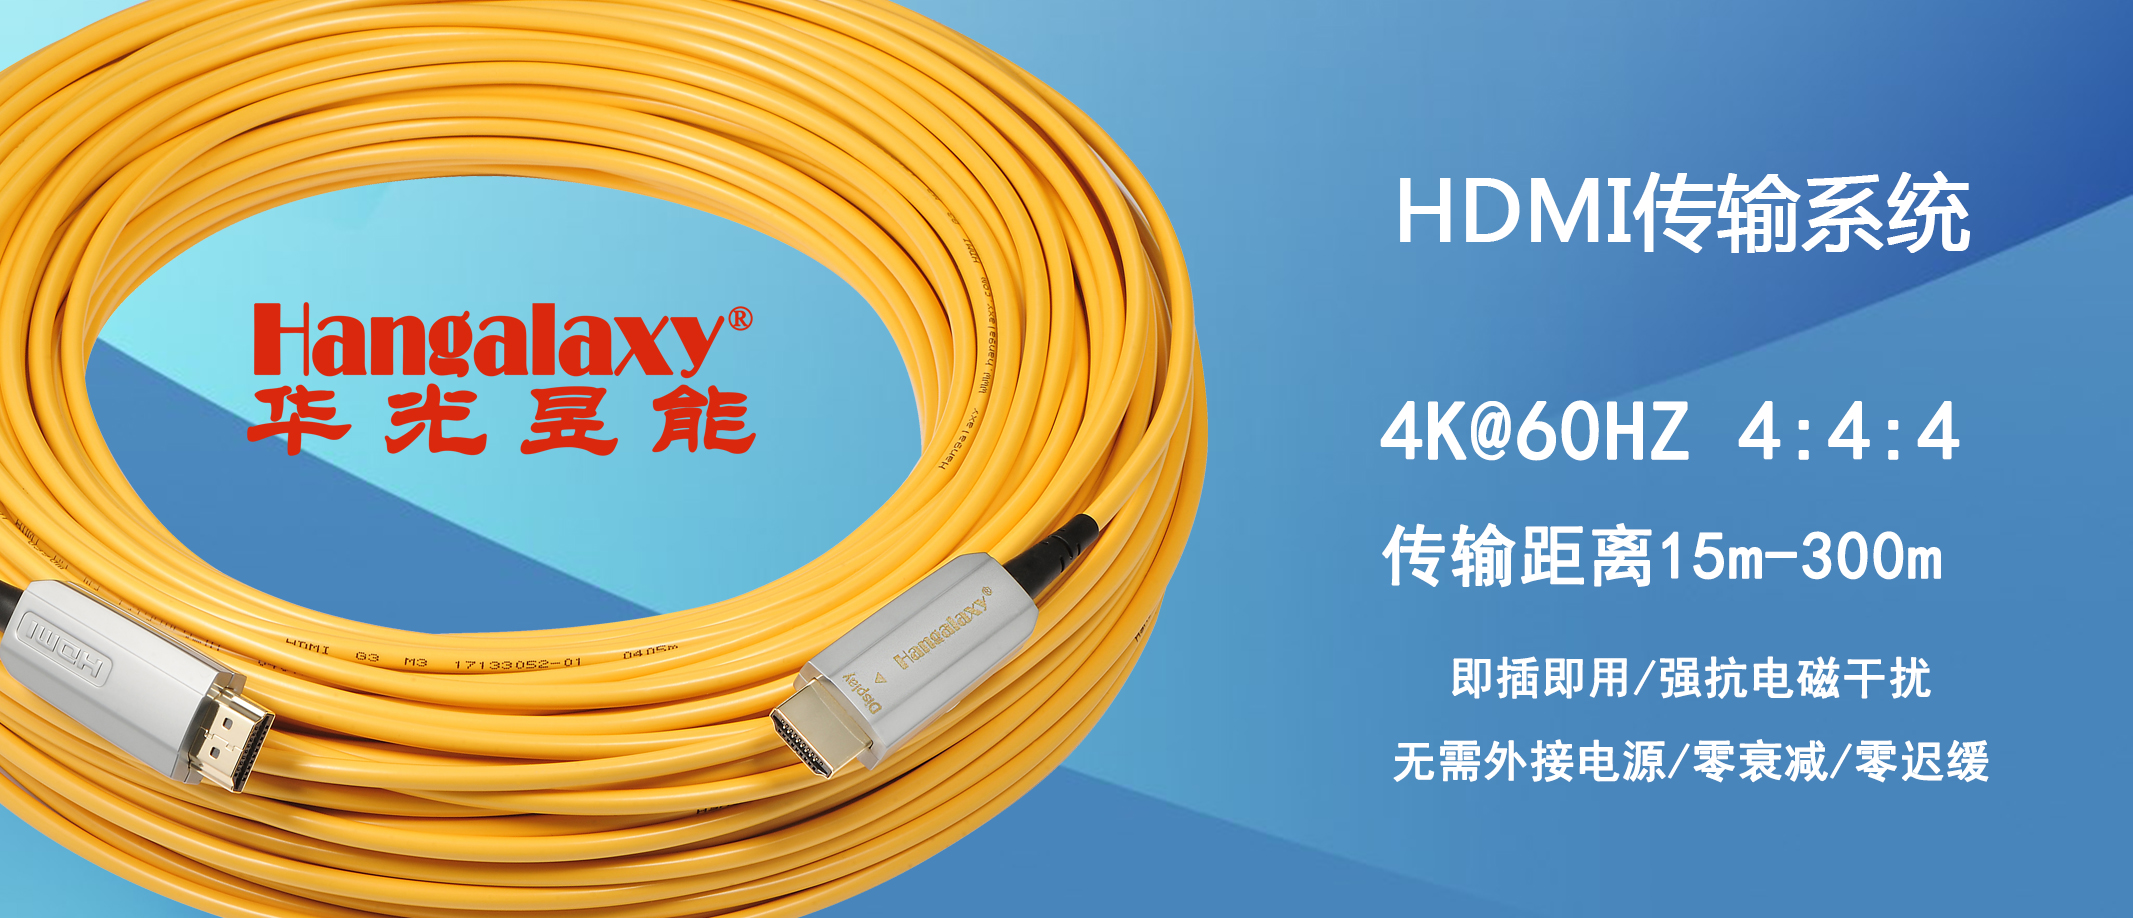 Hangalaxy HD/2.0系列HDMI传输系统产品图